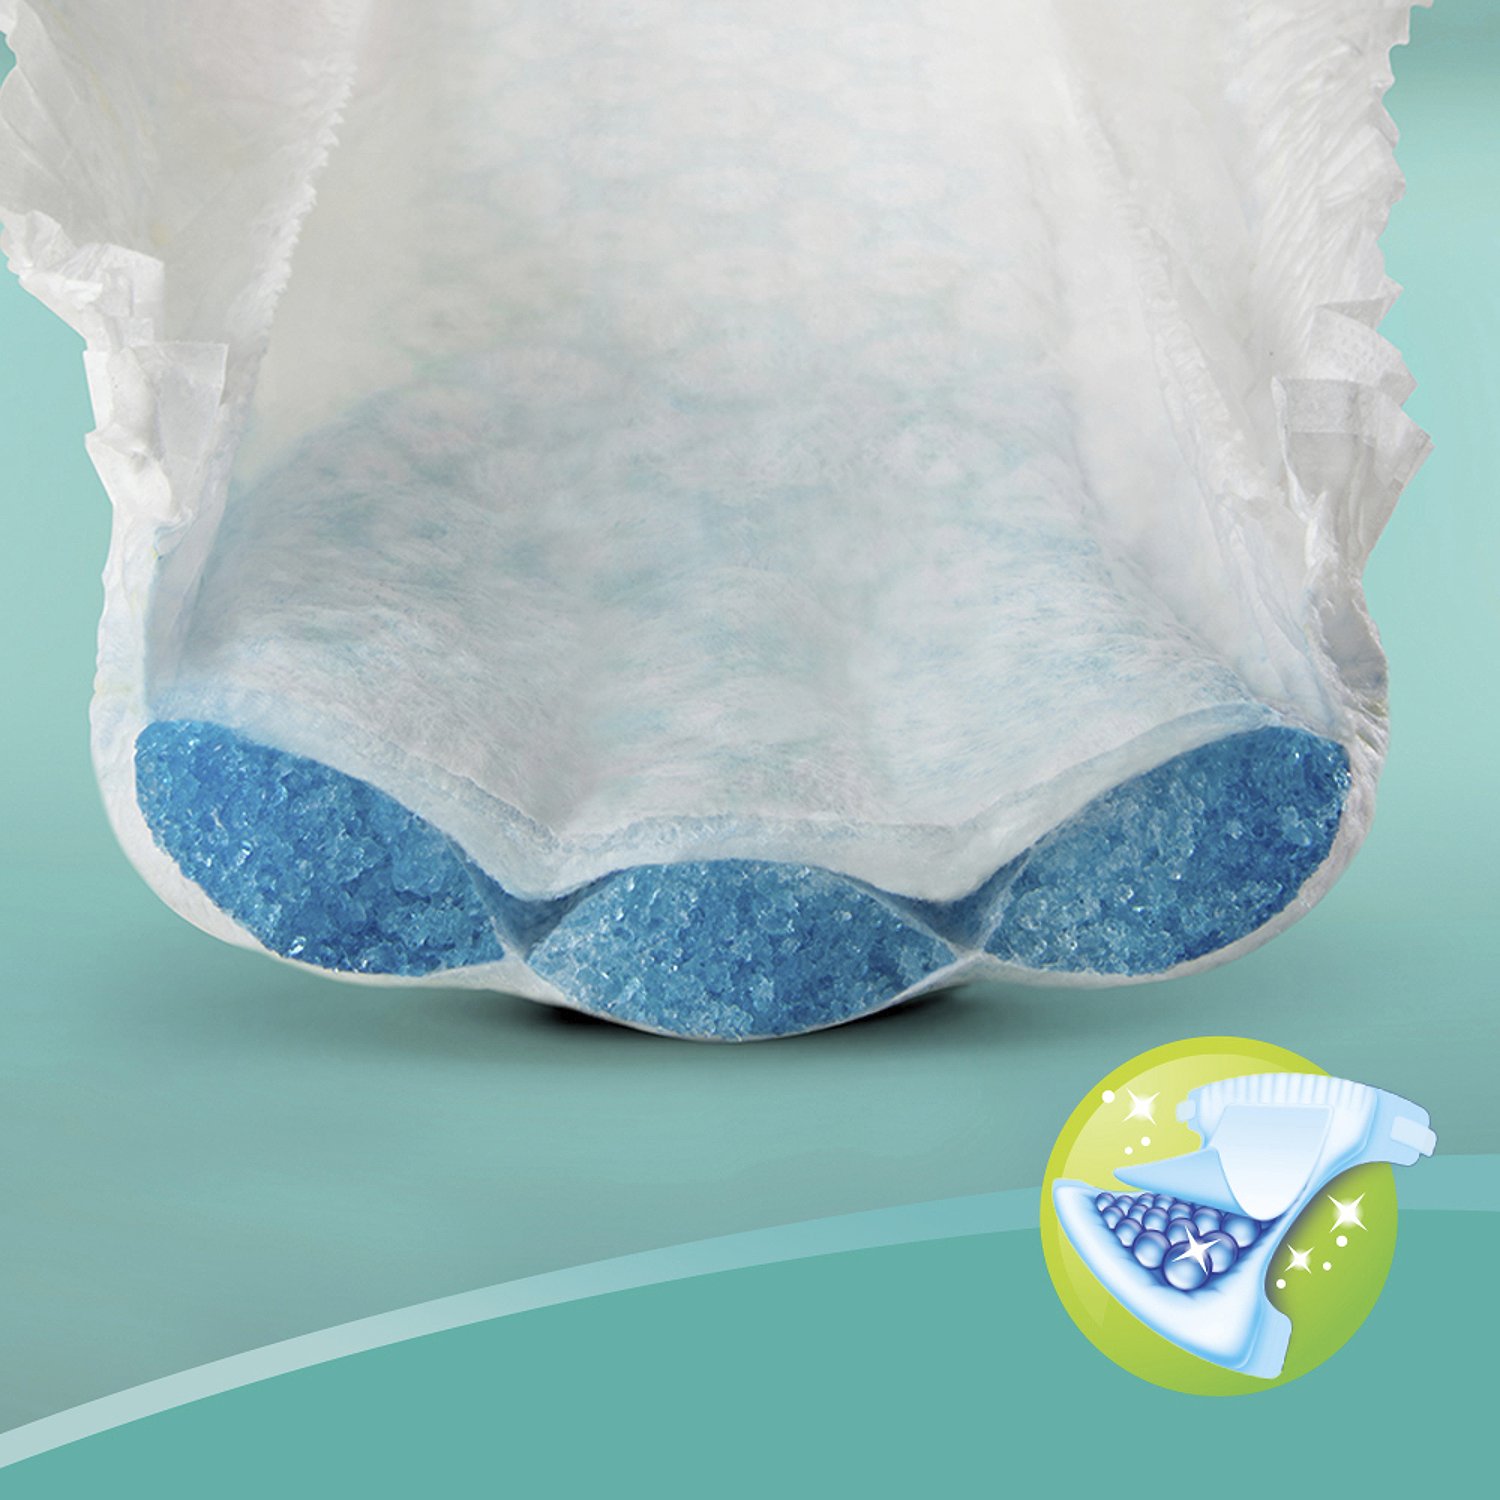 Подгузники Pampers Active Baby-Dry 5 11-16кг 16шт